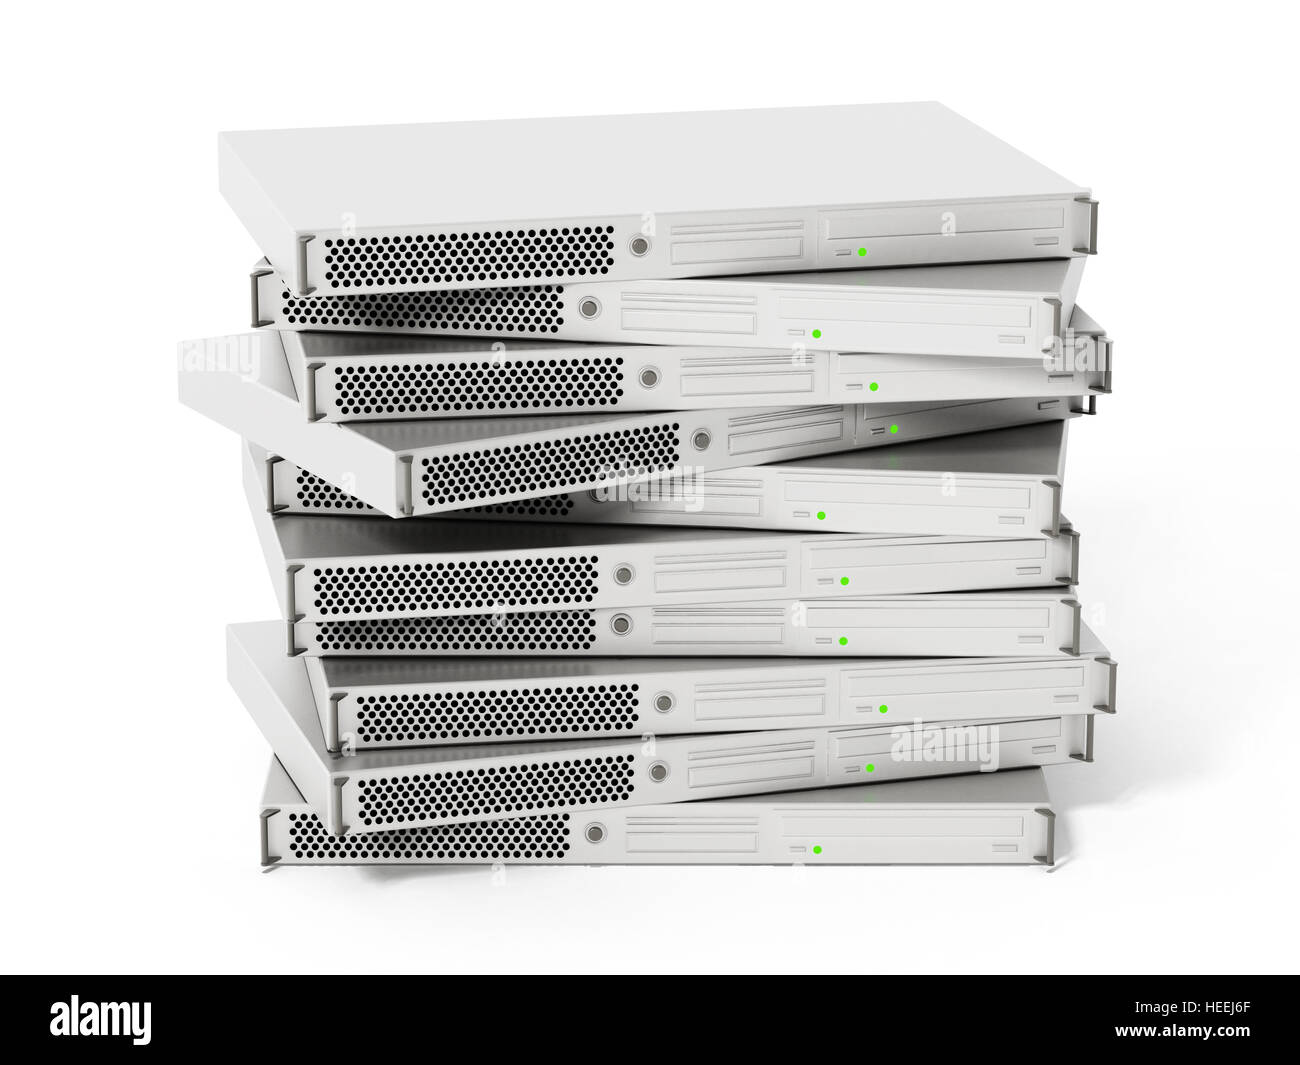 White data server units isolated on white background. 3D illustration. Stock Photo